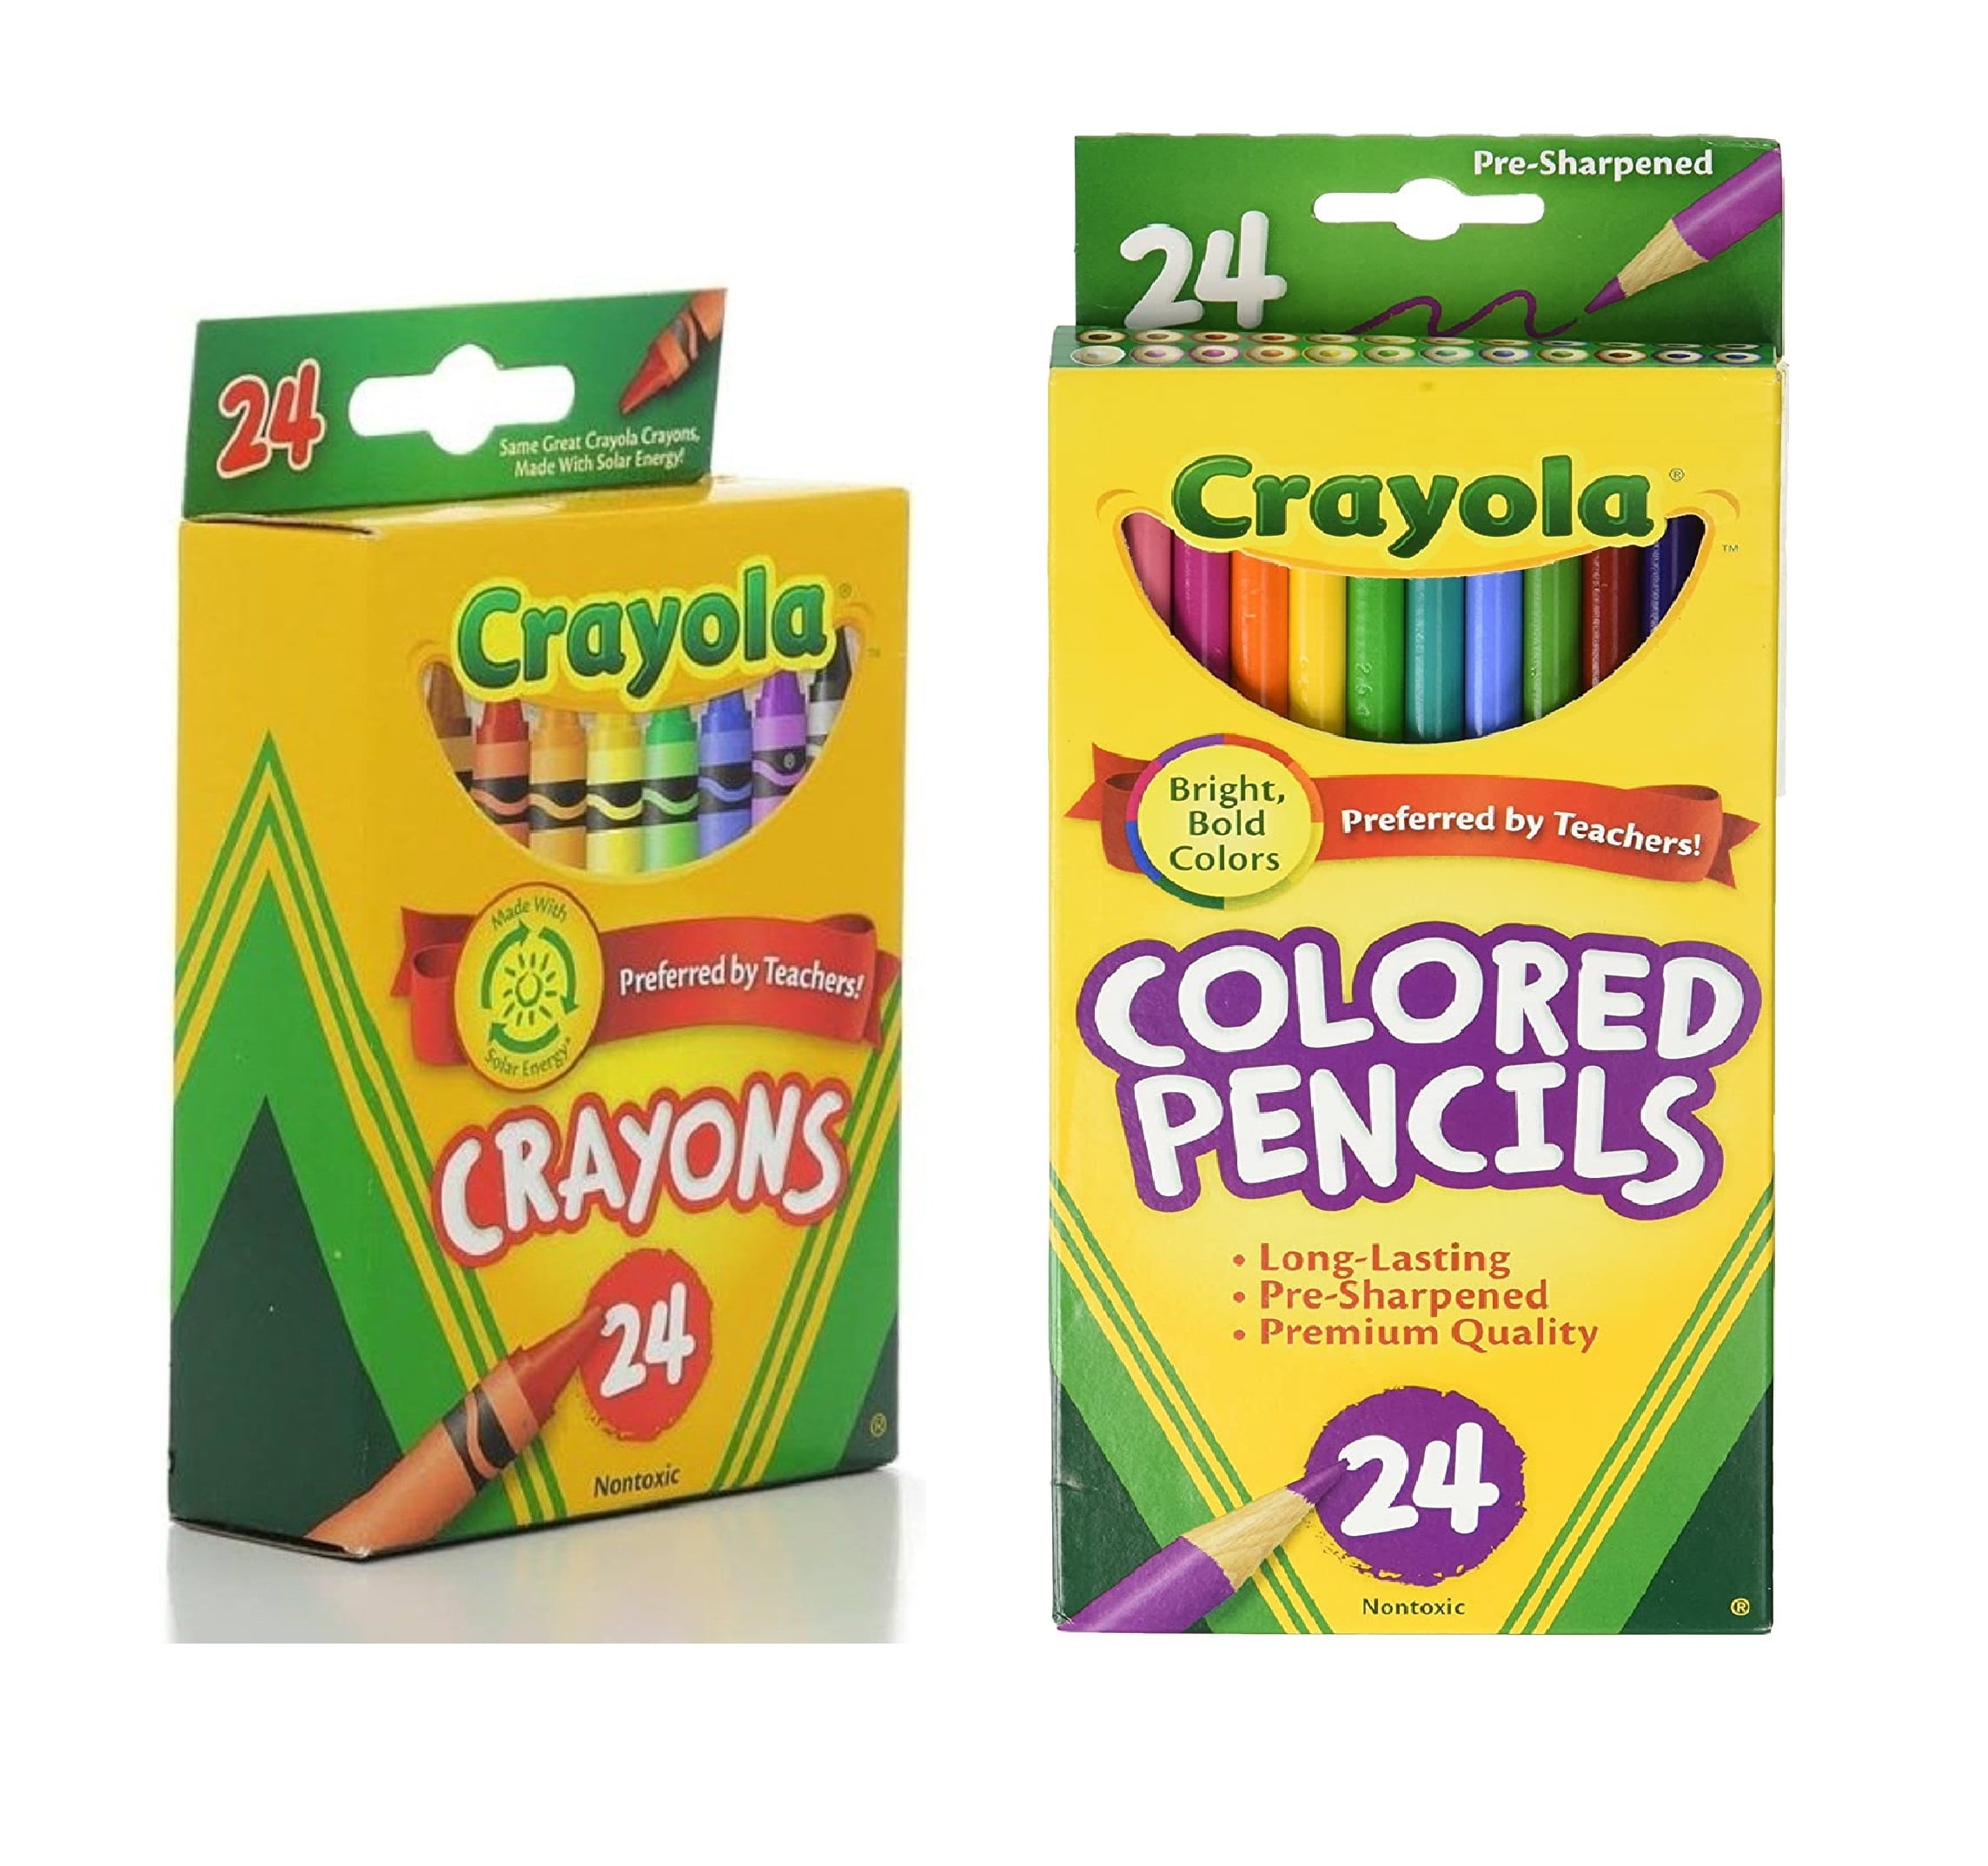 crayola-crayons-box-crayola-classic-colored-pencils-24-count-s-2-pack-walmart